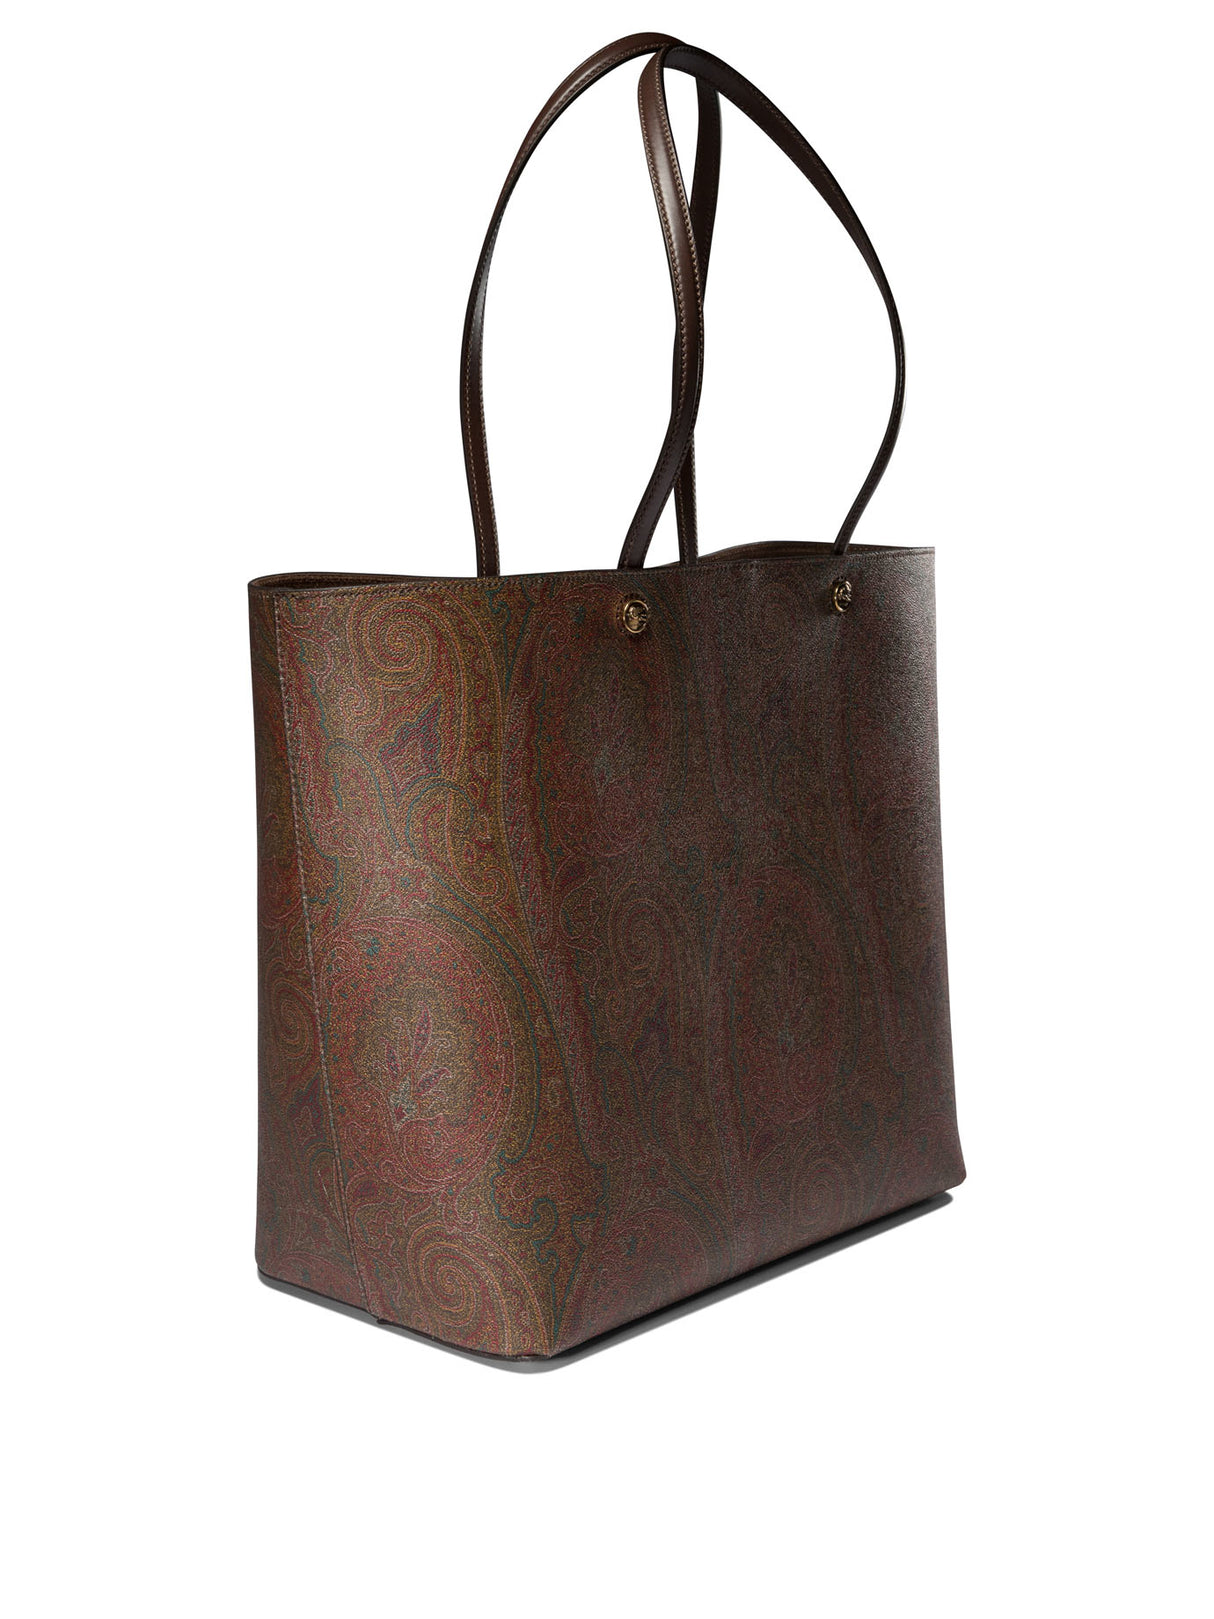 "ETRO ESSENTIAL XL" Tote Handbag Handbag